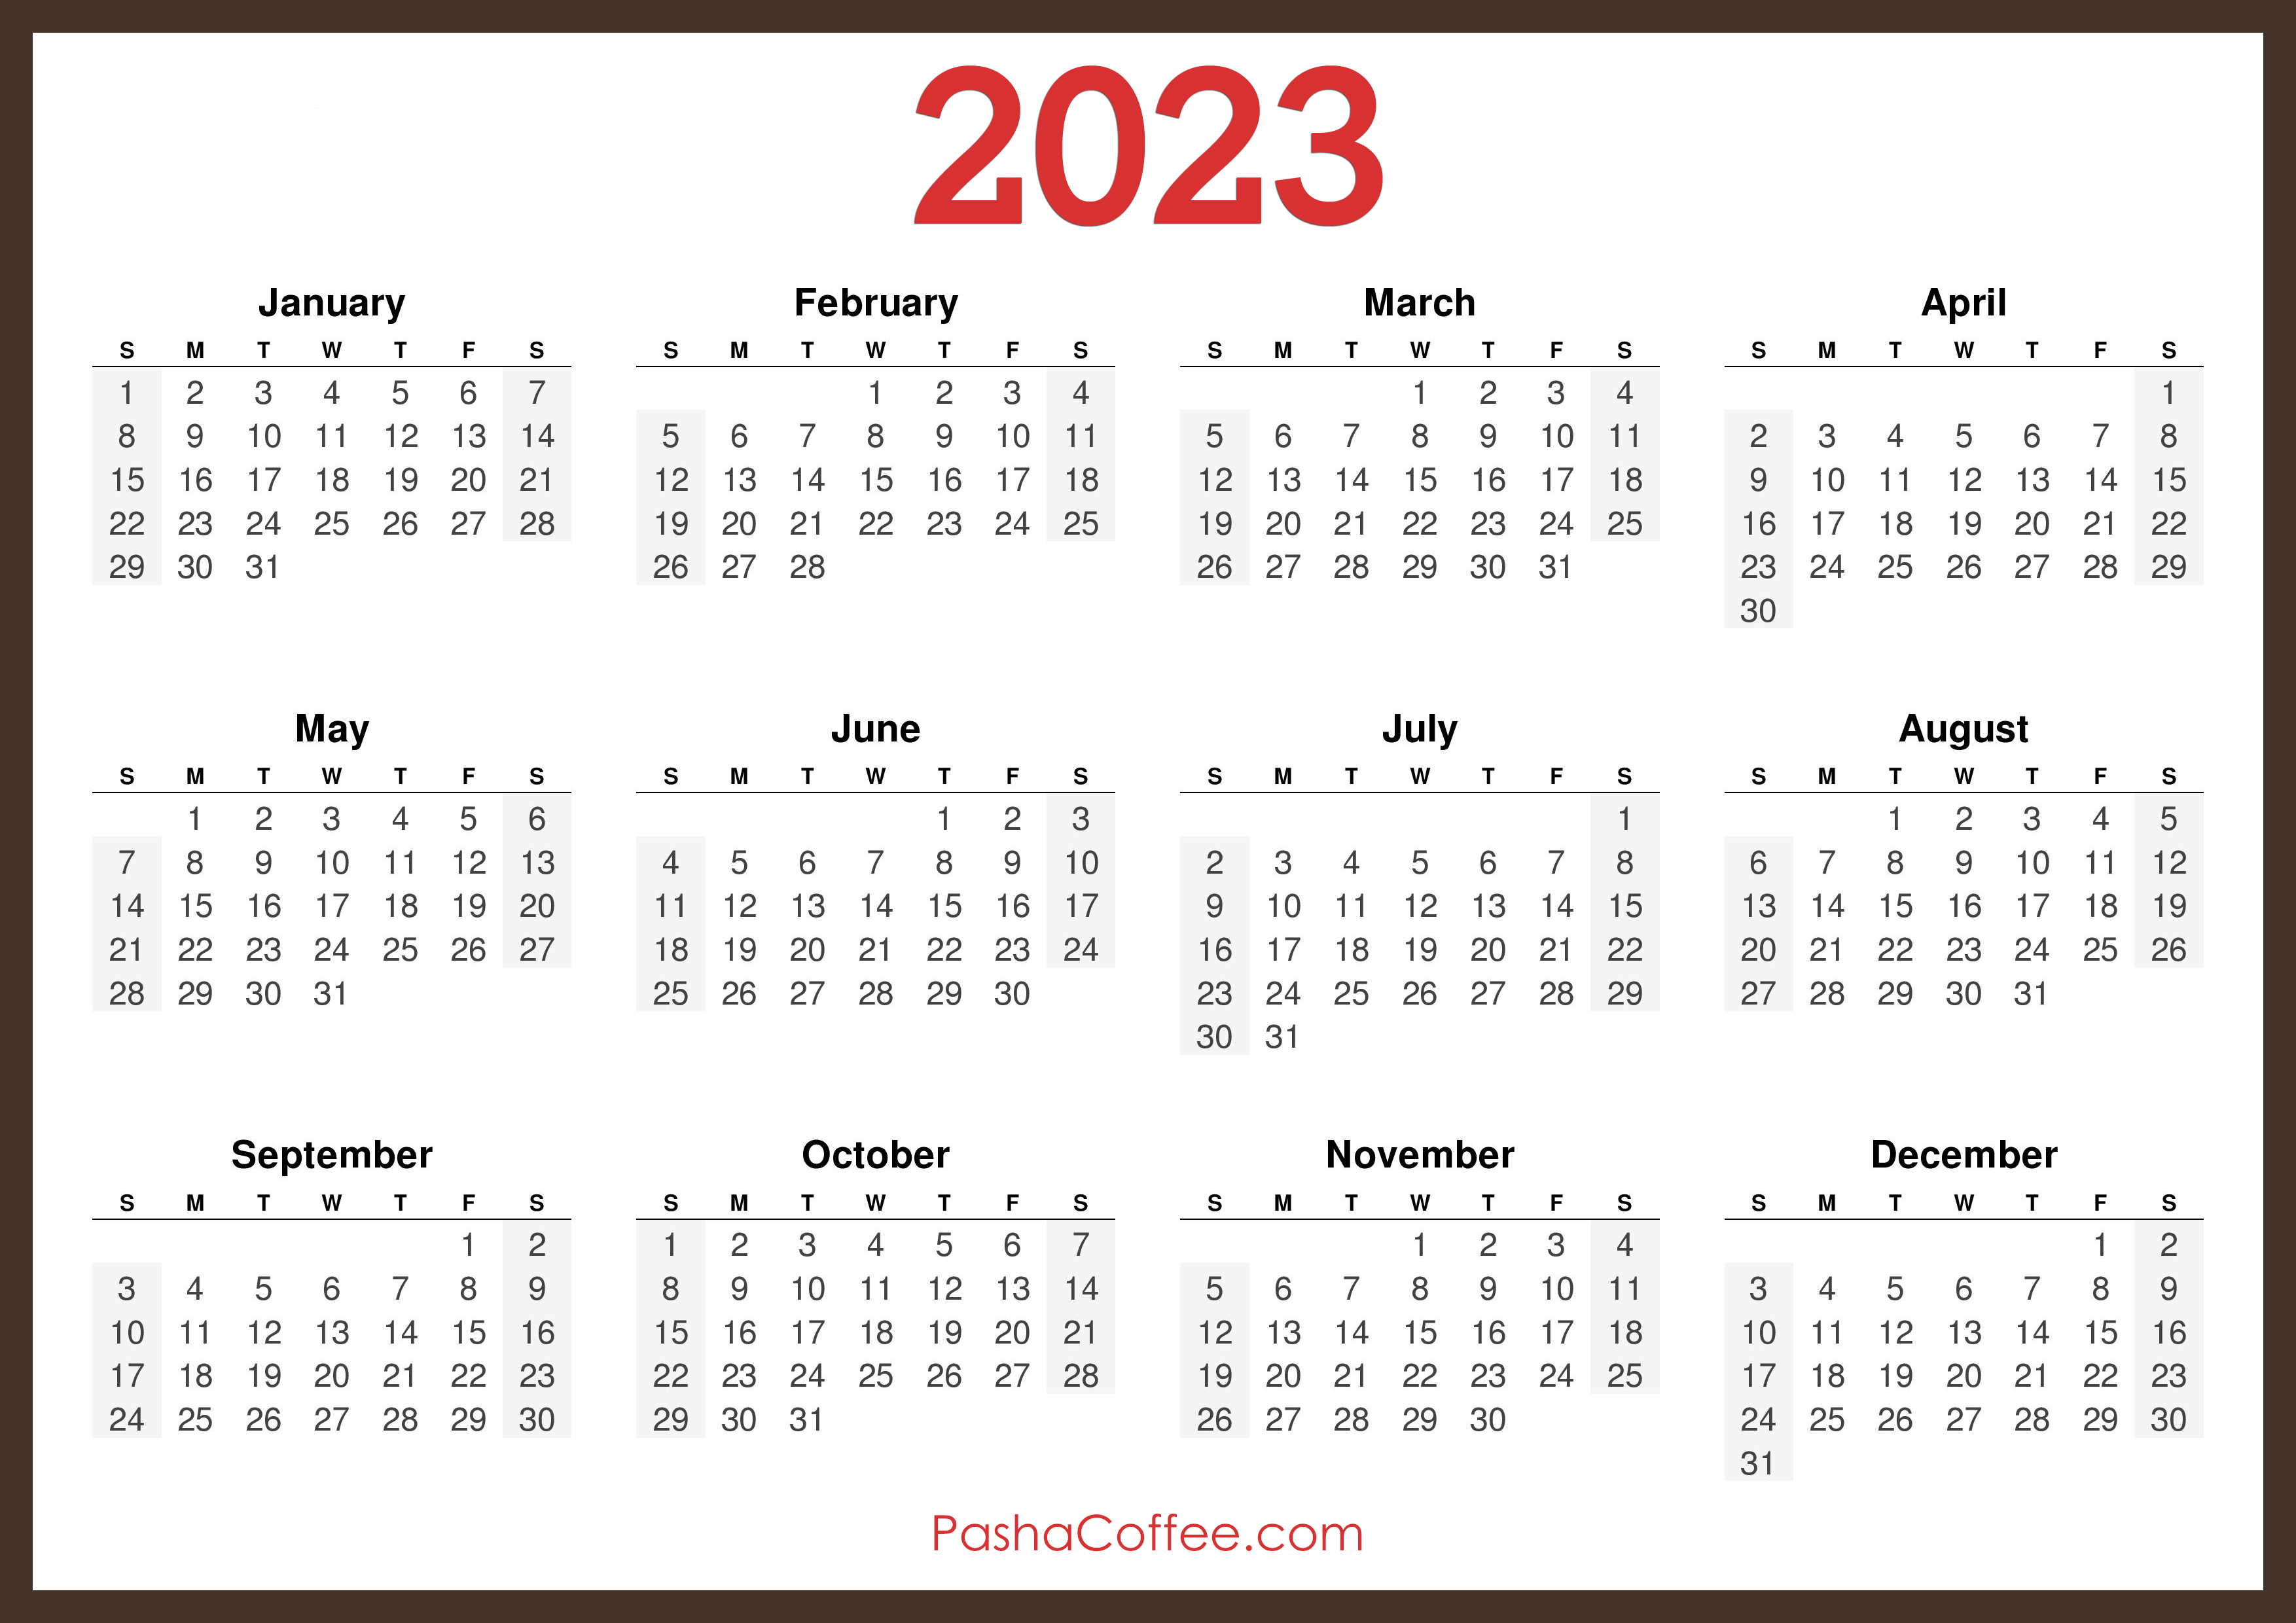 downloadable-calendar-2023-free-pdf-get-calendar-2023-update